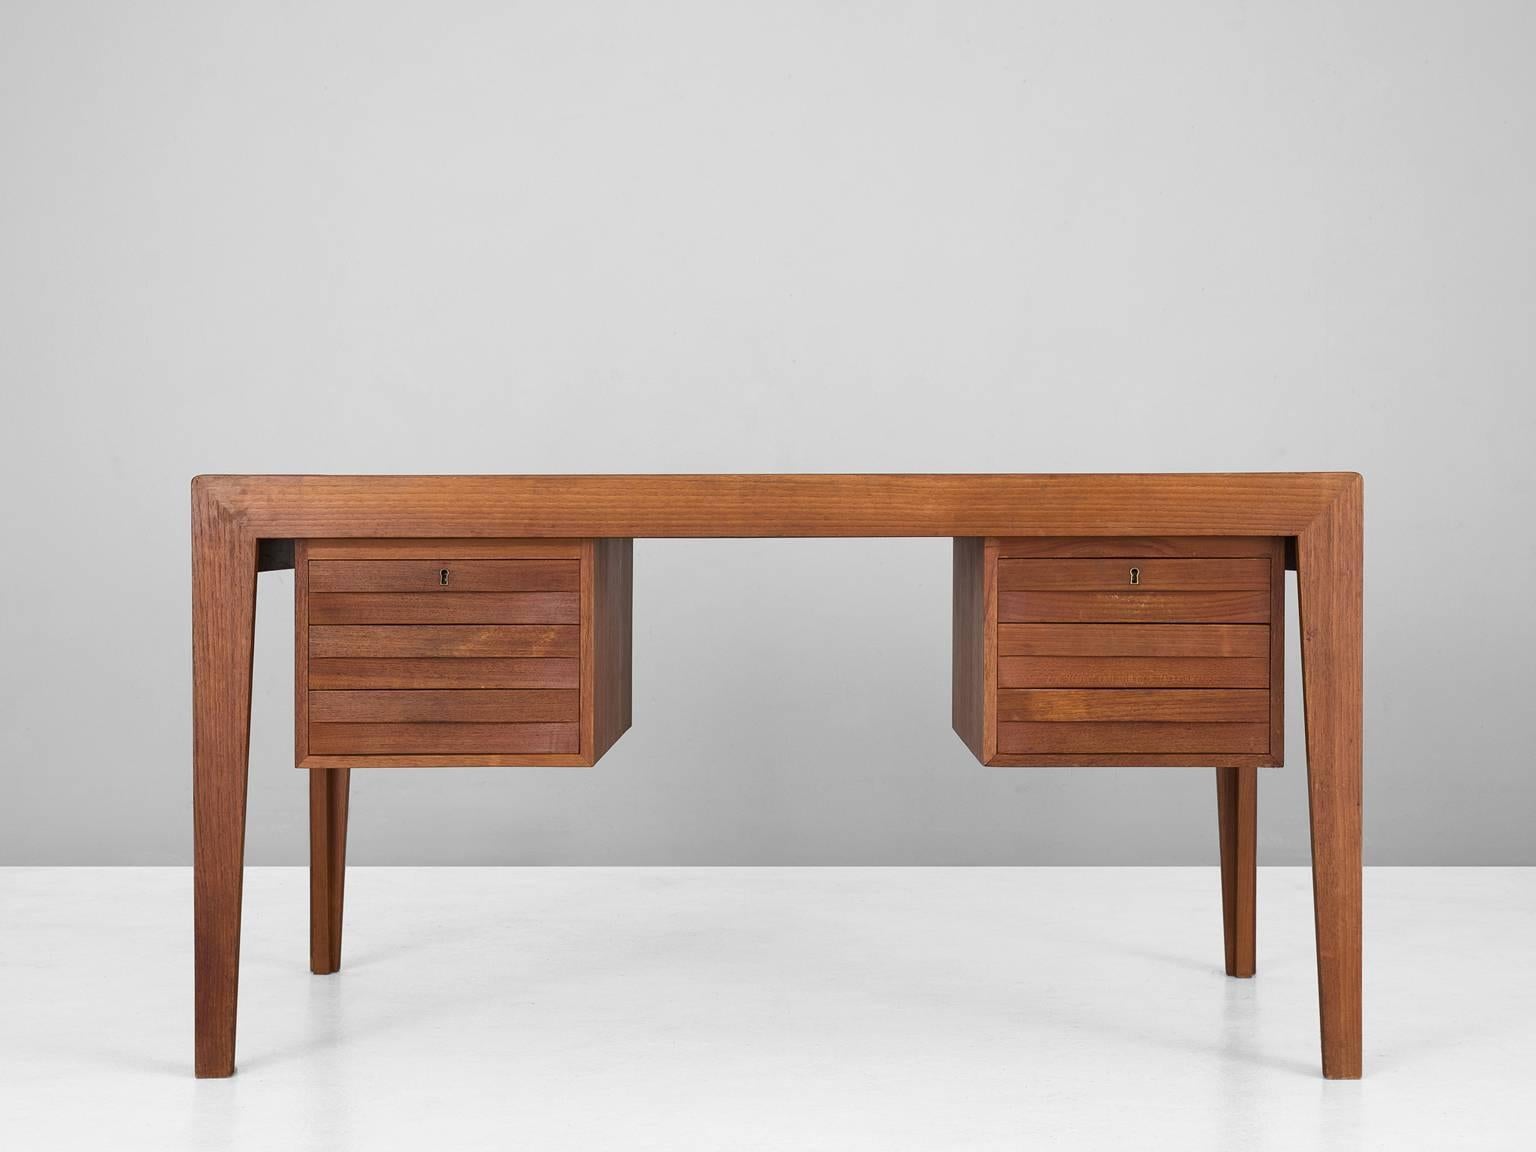 Desk in teak, attributed to Peter Hvidt and Orla Mølgaard-Nielsen, Denmark, 1950s.

Beautiful Scandinavian desk in the style of Peter Hvidt and Orla Mølgaard-Nielsen. The design looks simplistic, yet this desk holds some surprising element. Both